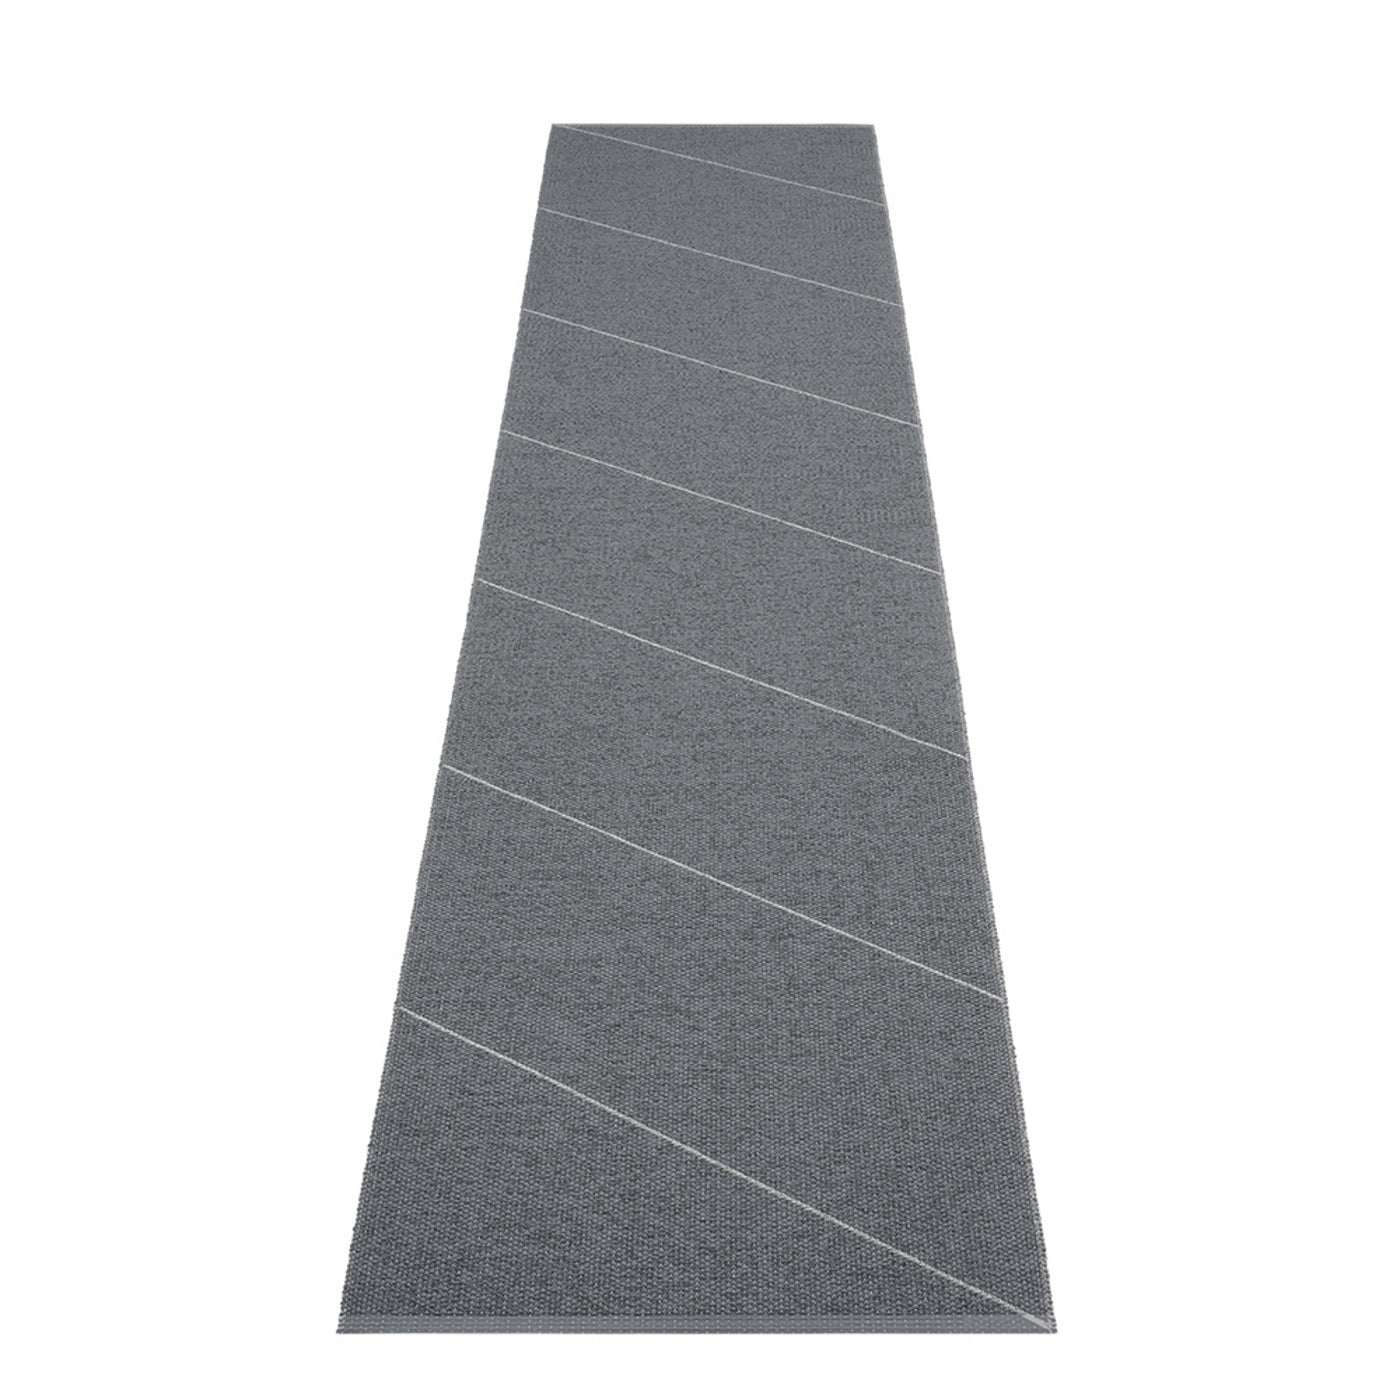 Sagg Main Plastic Floor Mats Granit (Multiple Sizes)